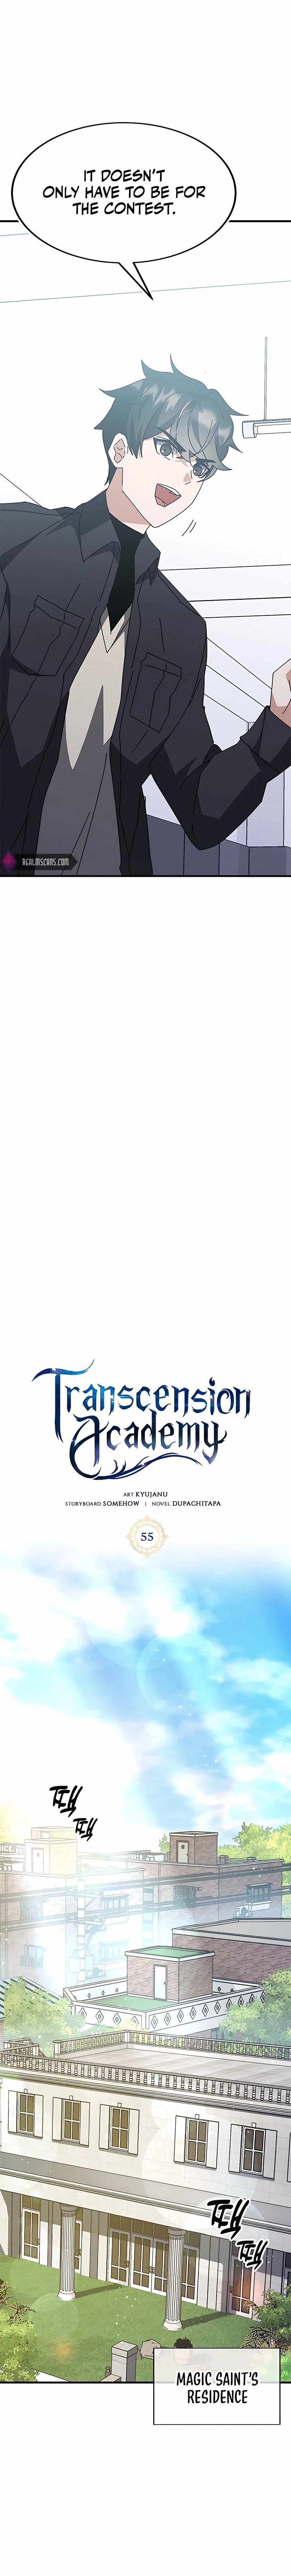 transcension_academy_55_7